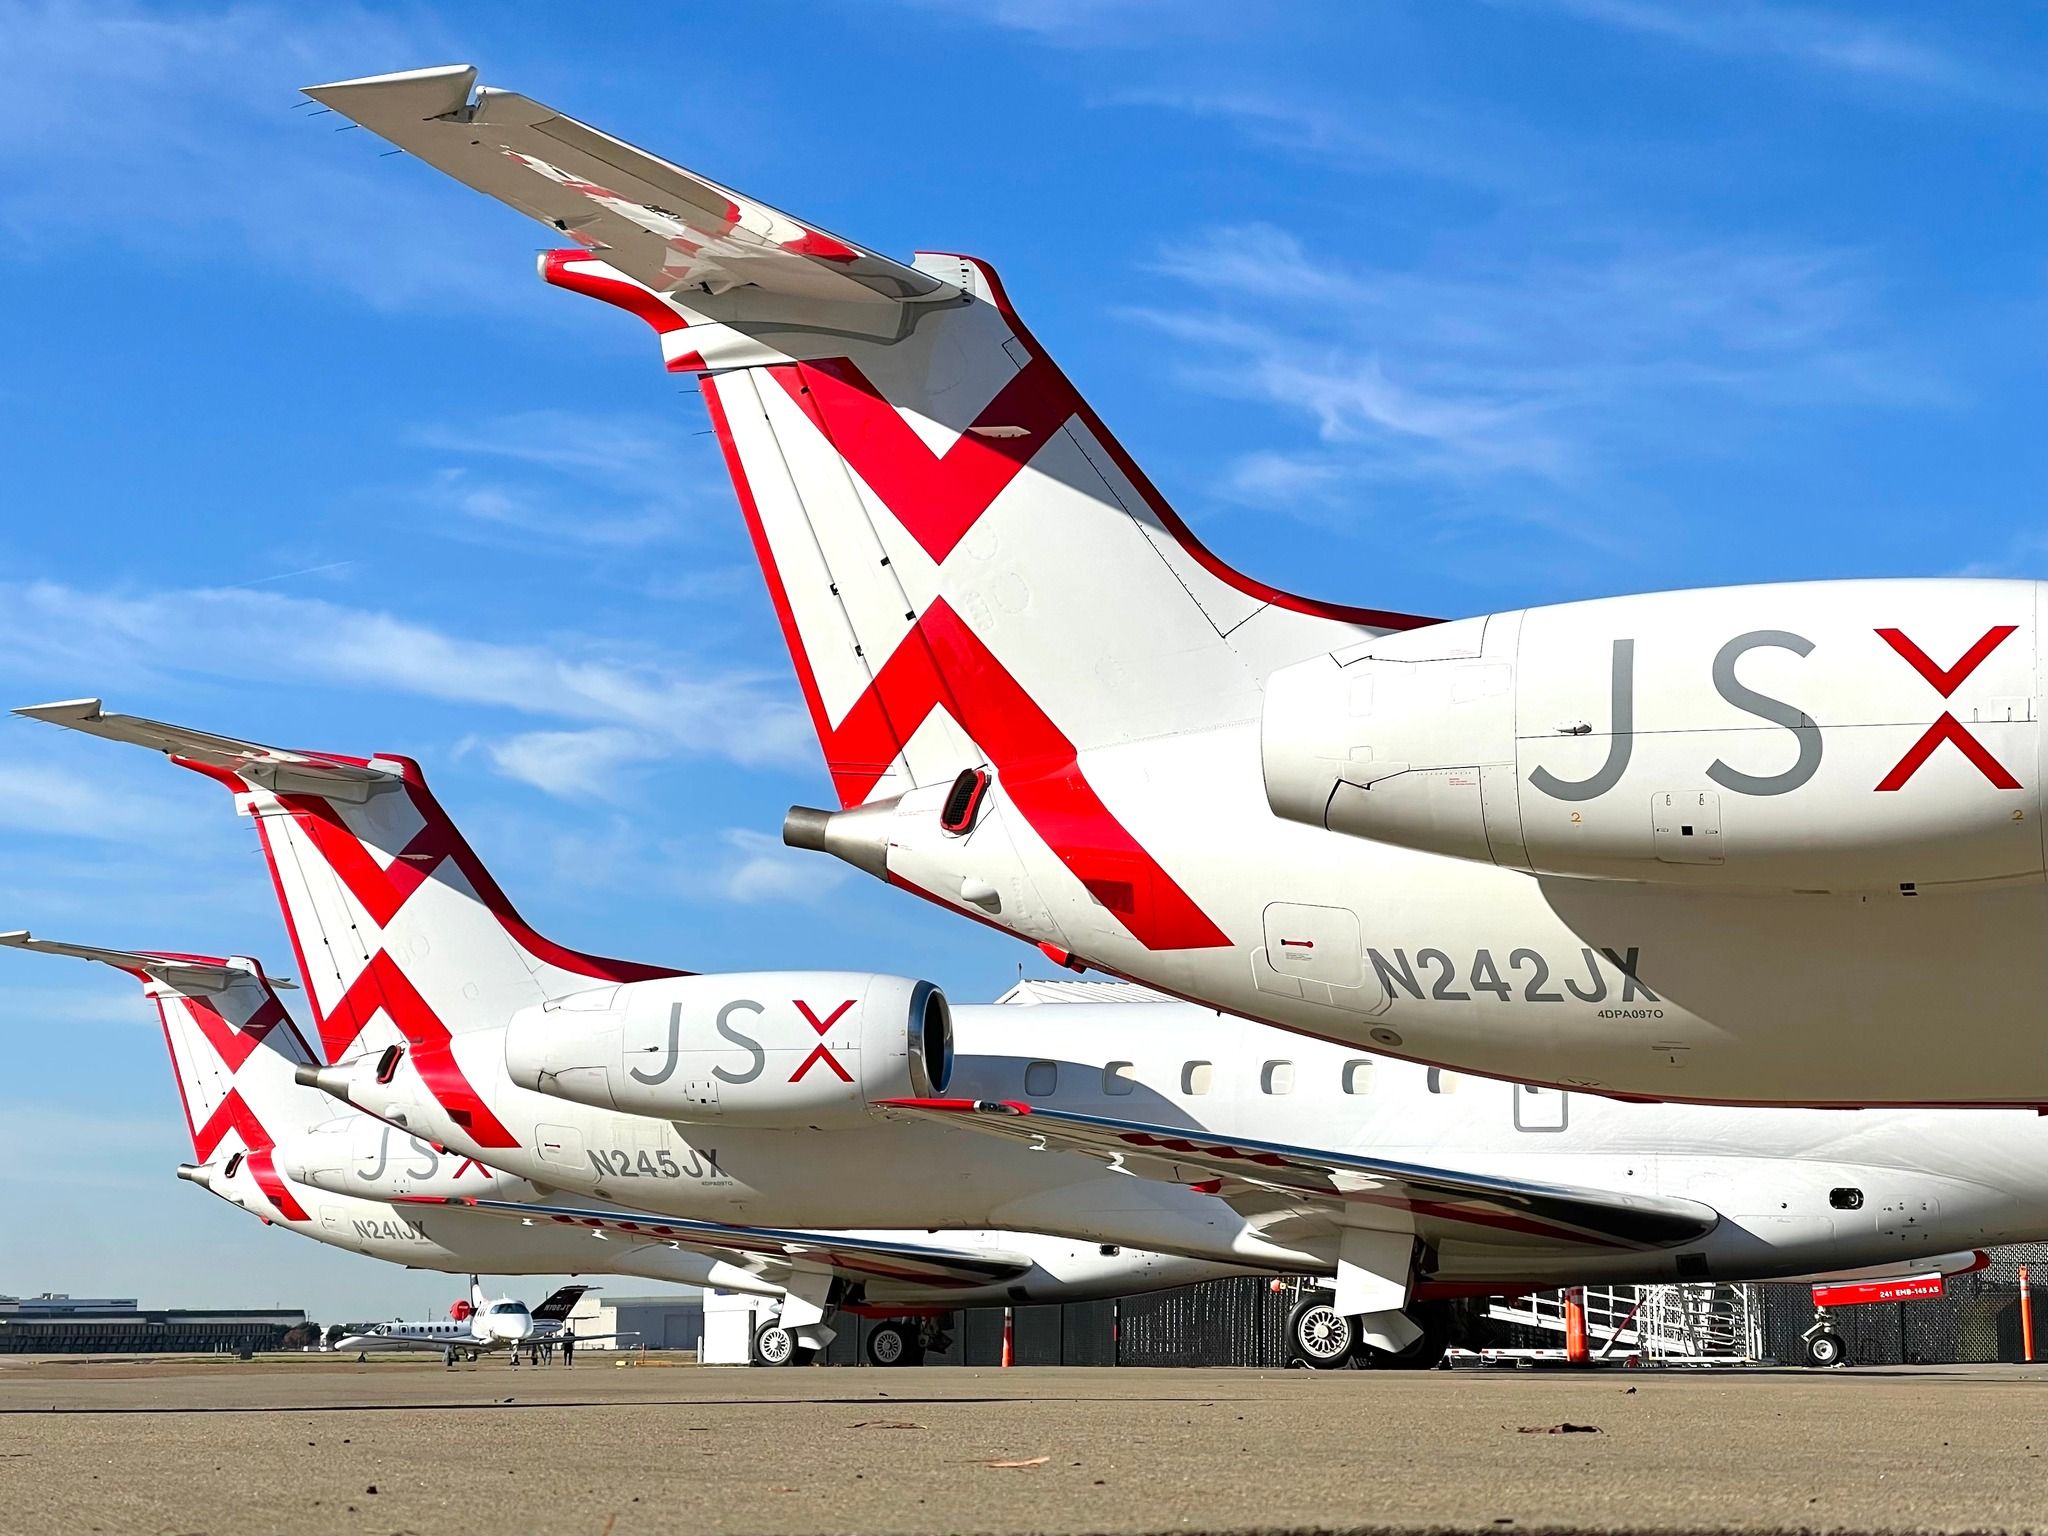 JSX Embraer aircraft parked.